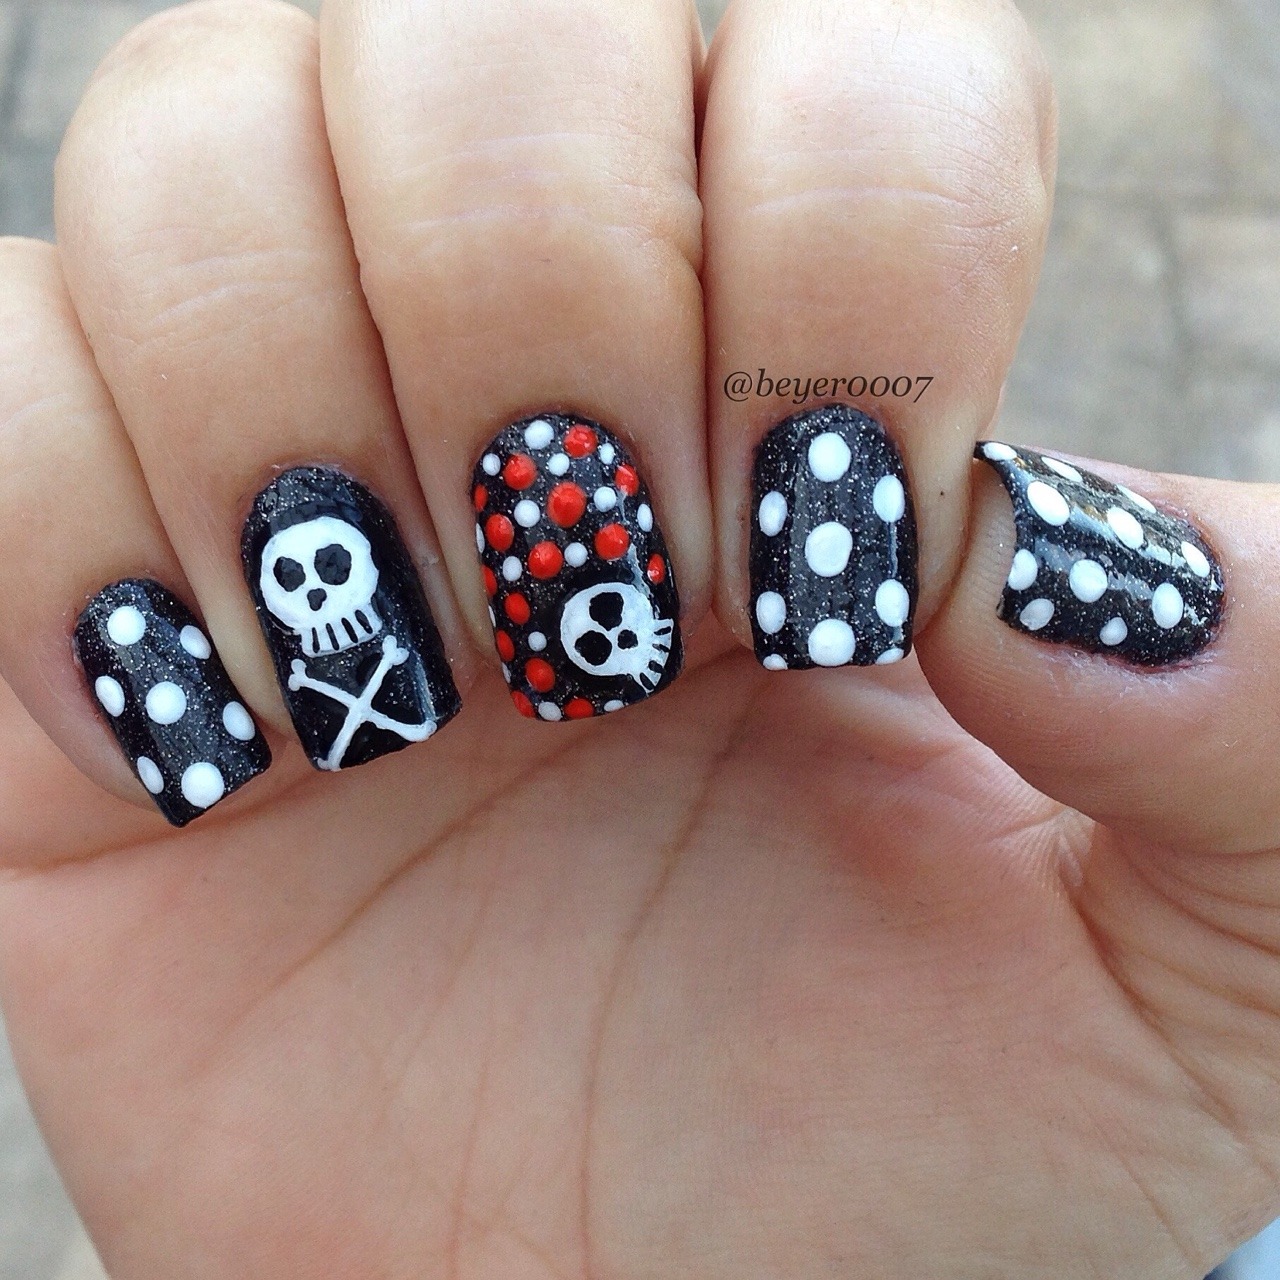 pirate nails